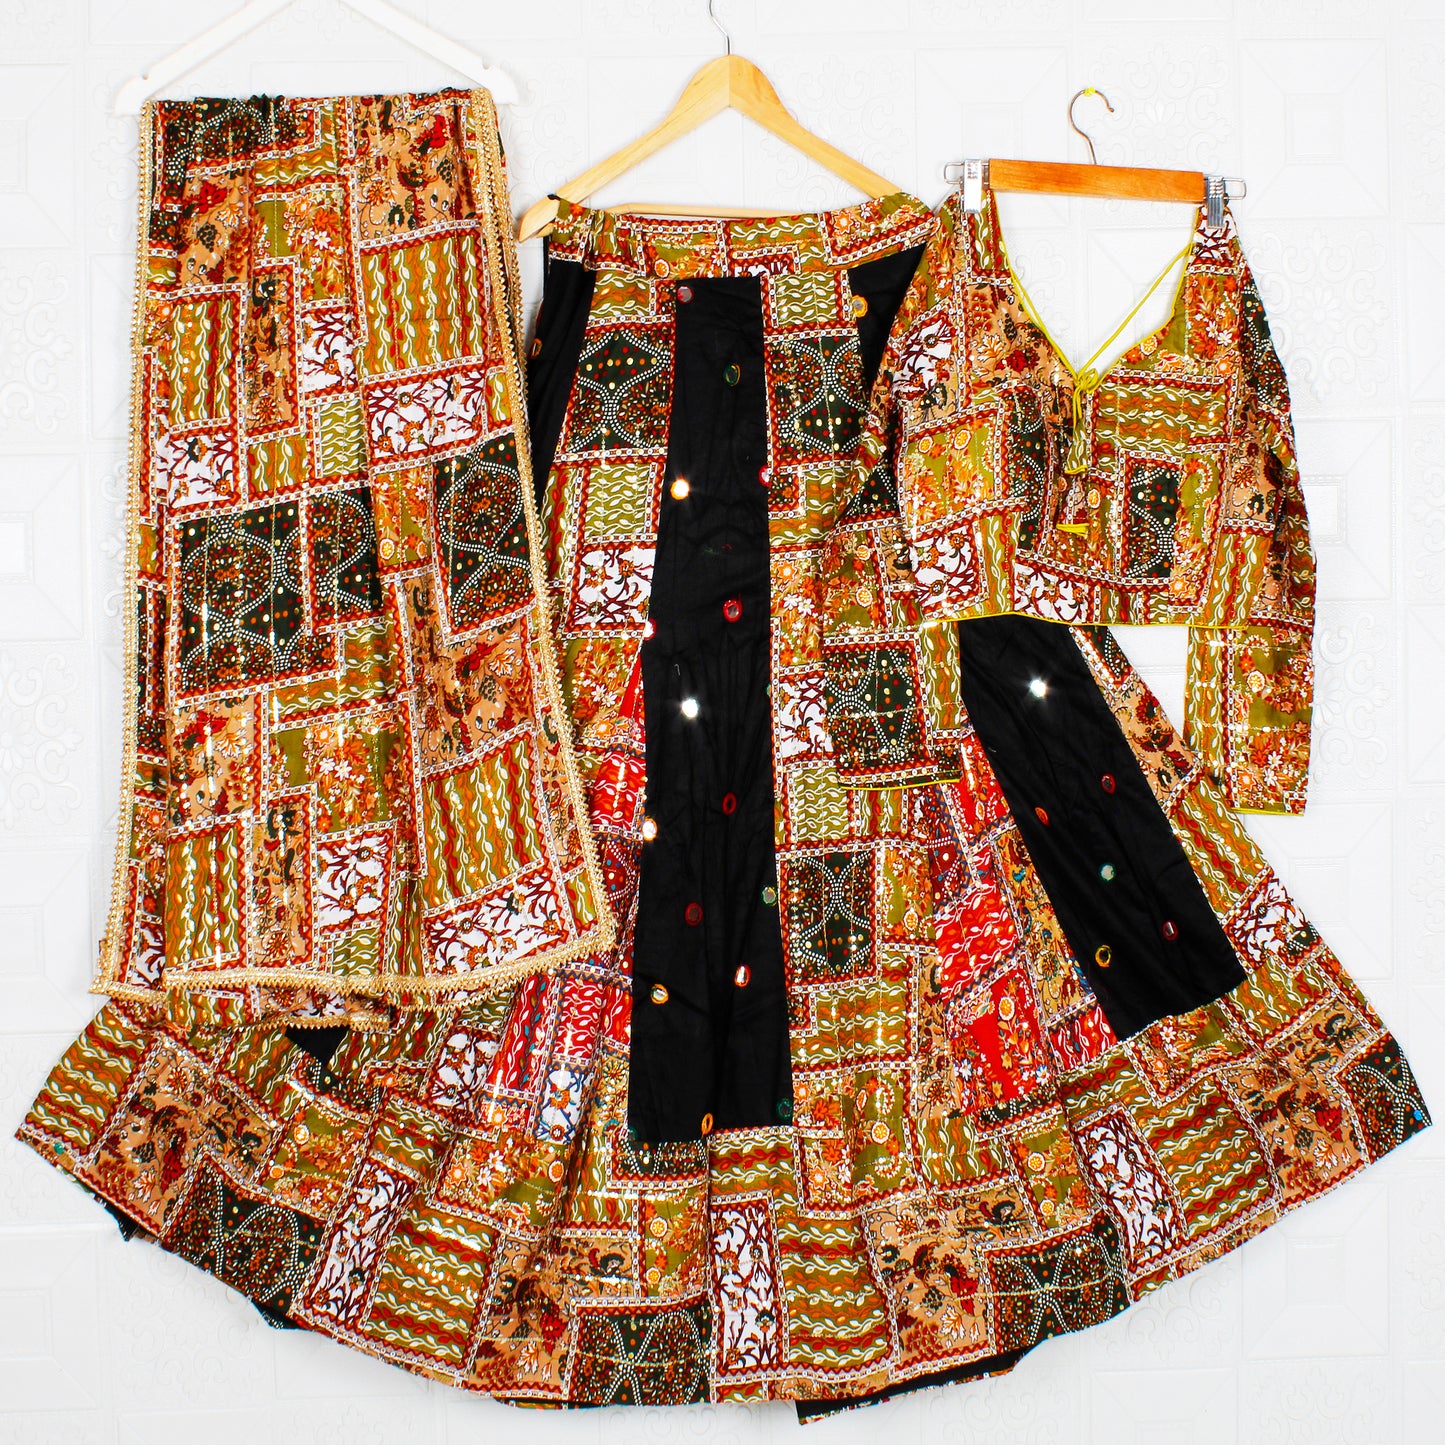 Black and Brown Gujarati Chaniya Choli/Lehenga Dress with Multicolor Patterns Wedding Festival Gujarati Embroidery Border Indian Fashion